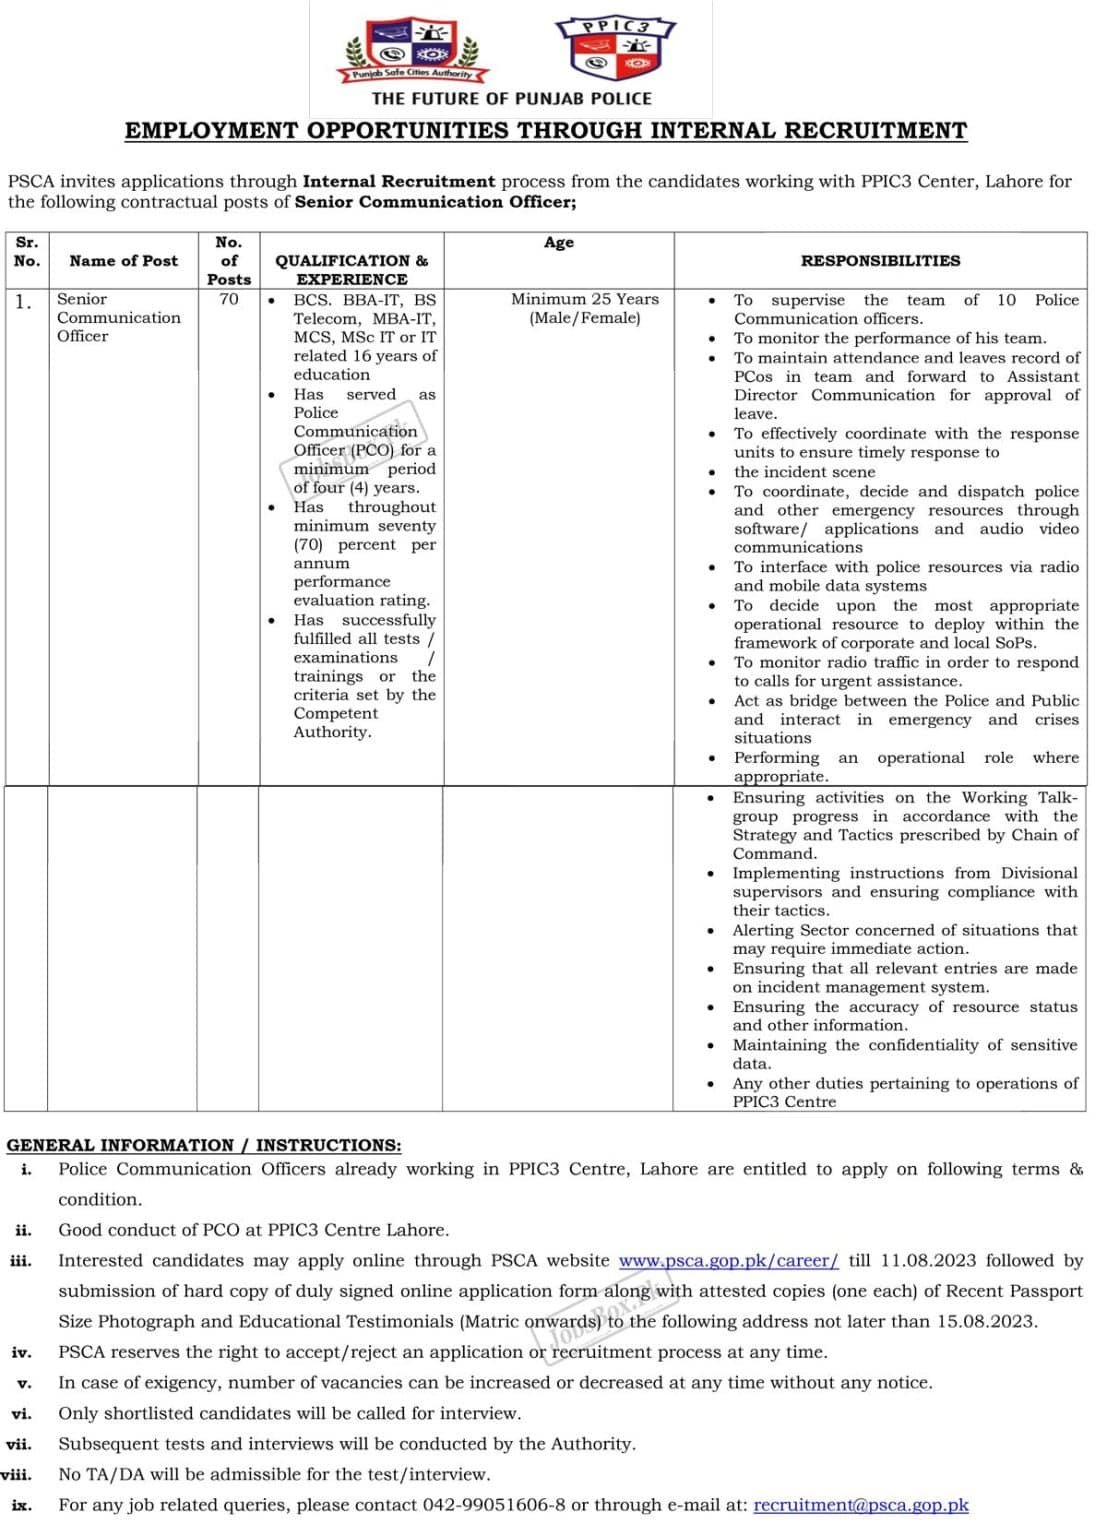 Senior Communication Officer Internal Recruitment at Punjab Police 2023